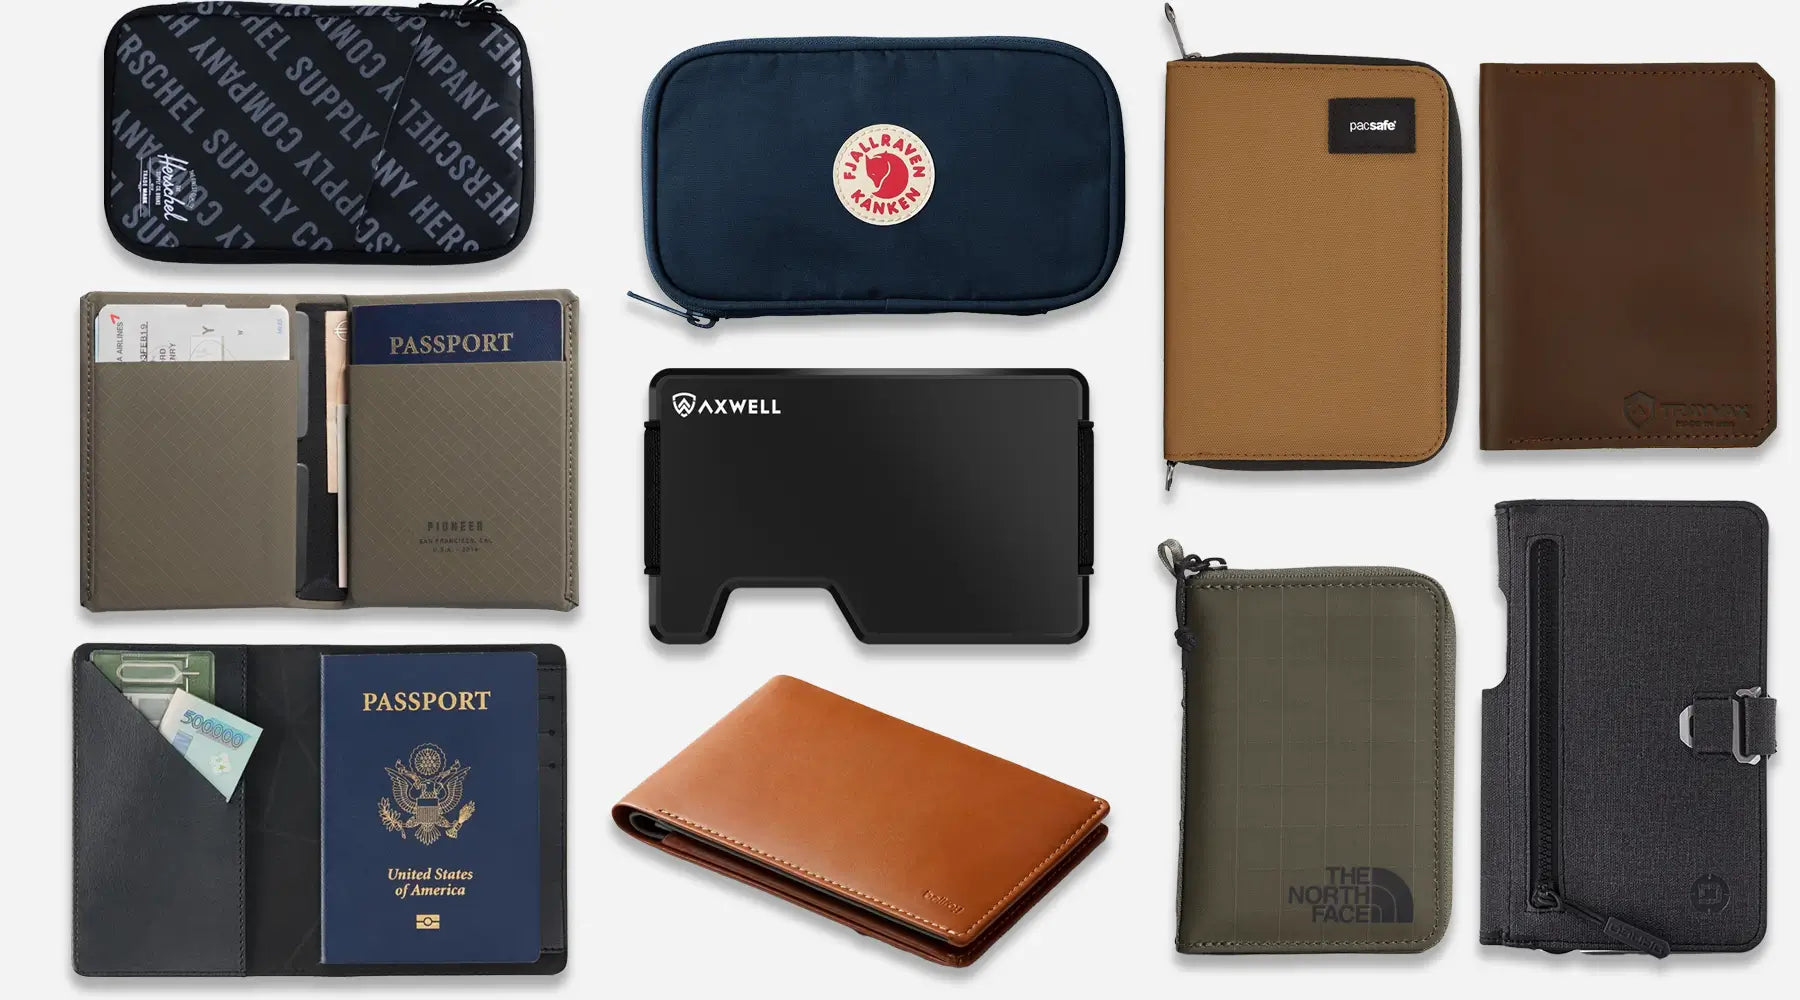 Ultra-thin Leather Passport Holder Travel Cover Case Passport Bag